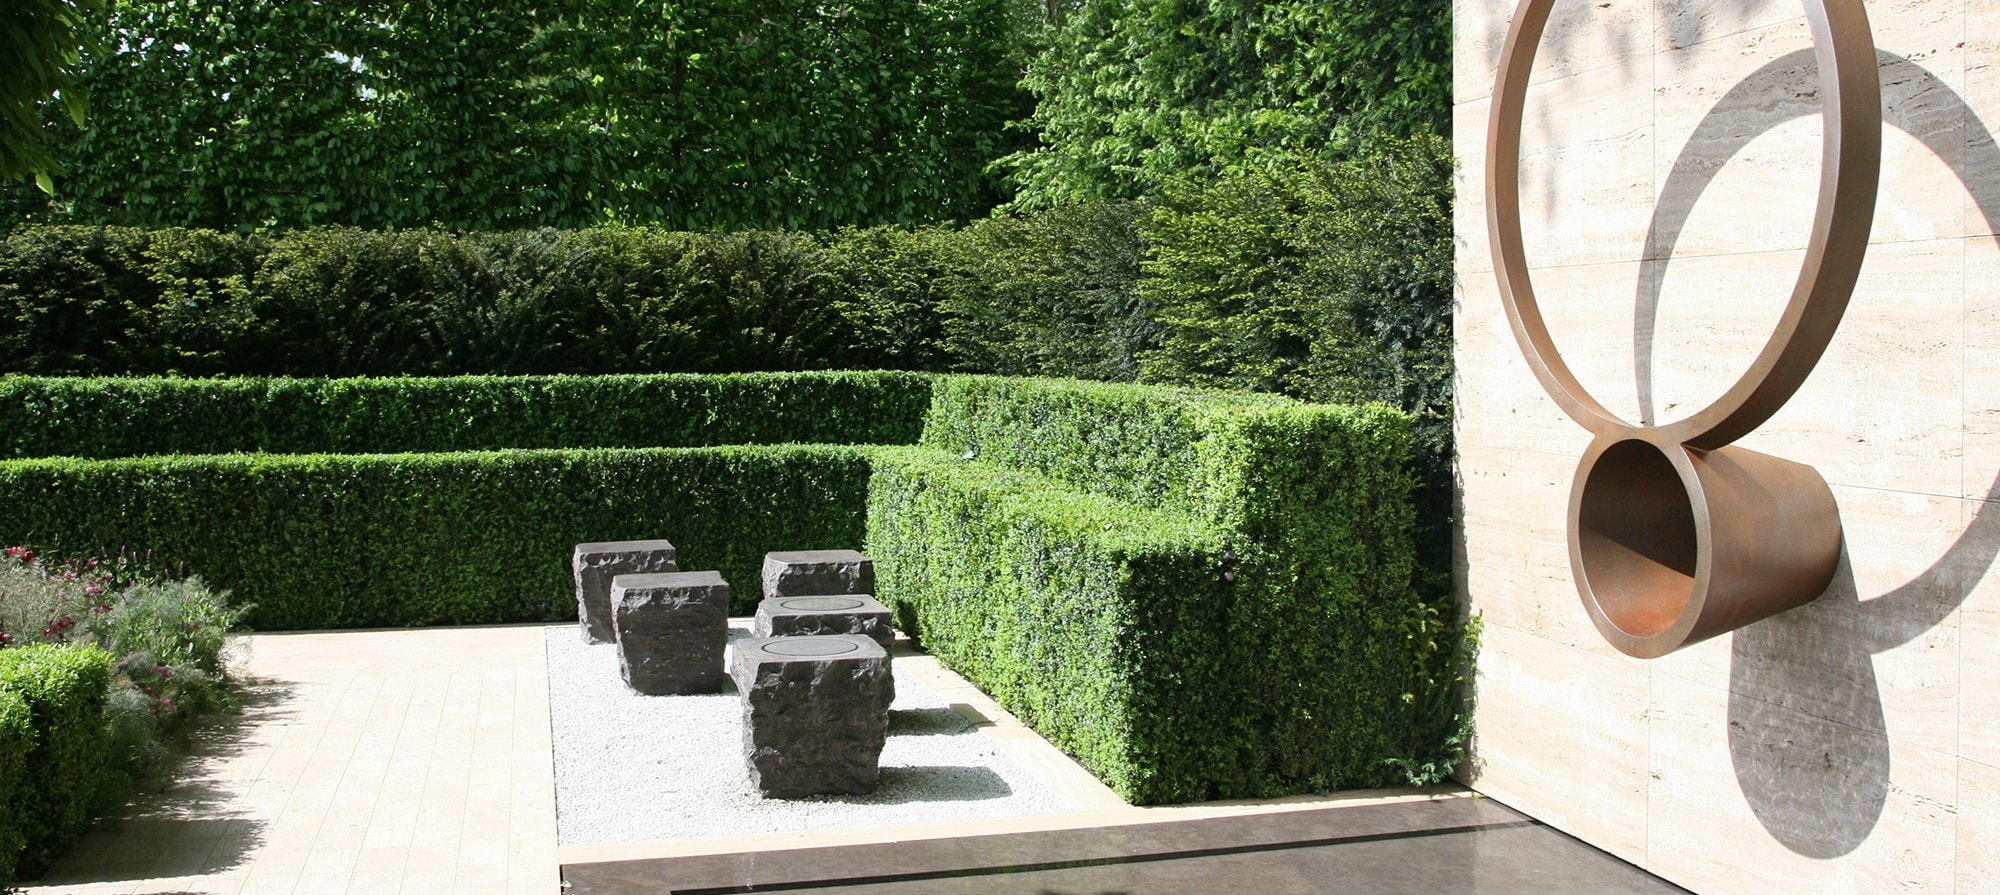 The Laurent-Perrier Garden designed by Luciano Giubbilei